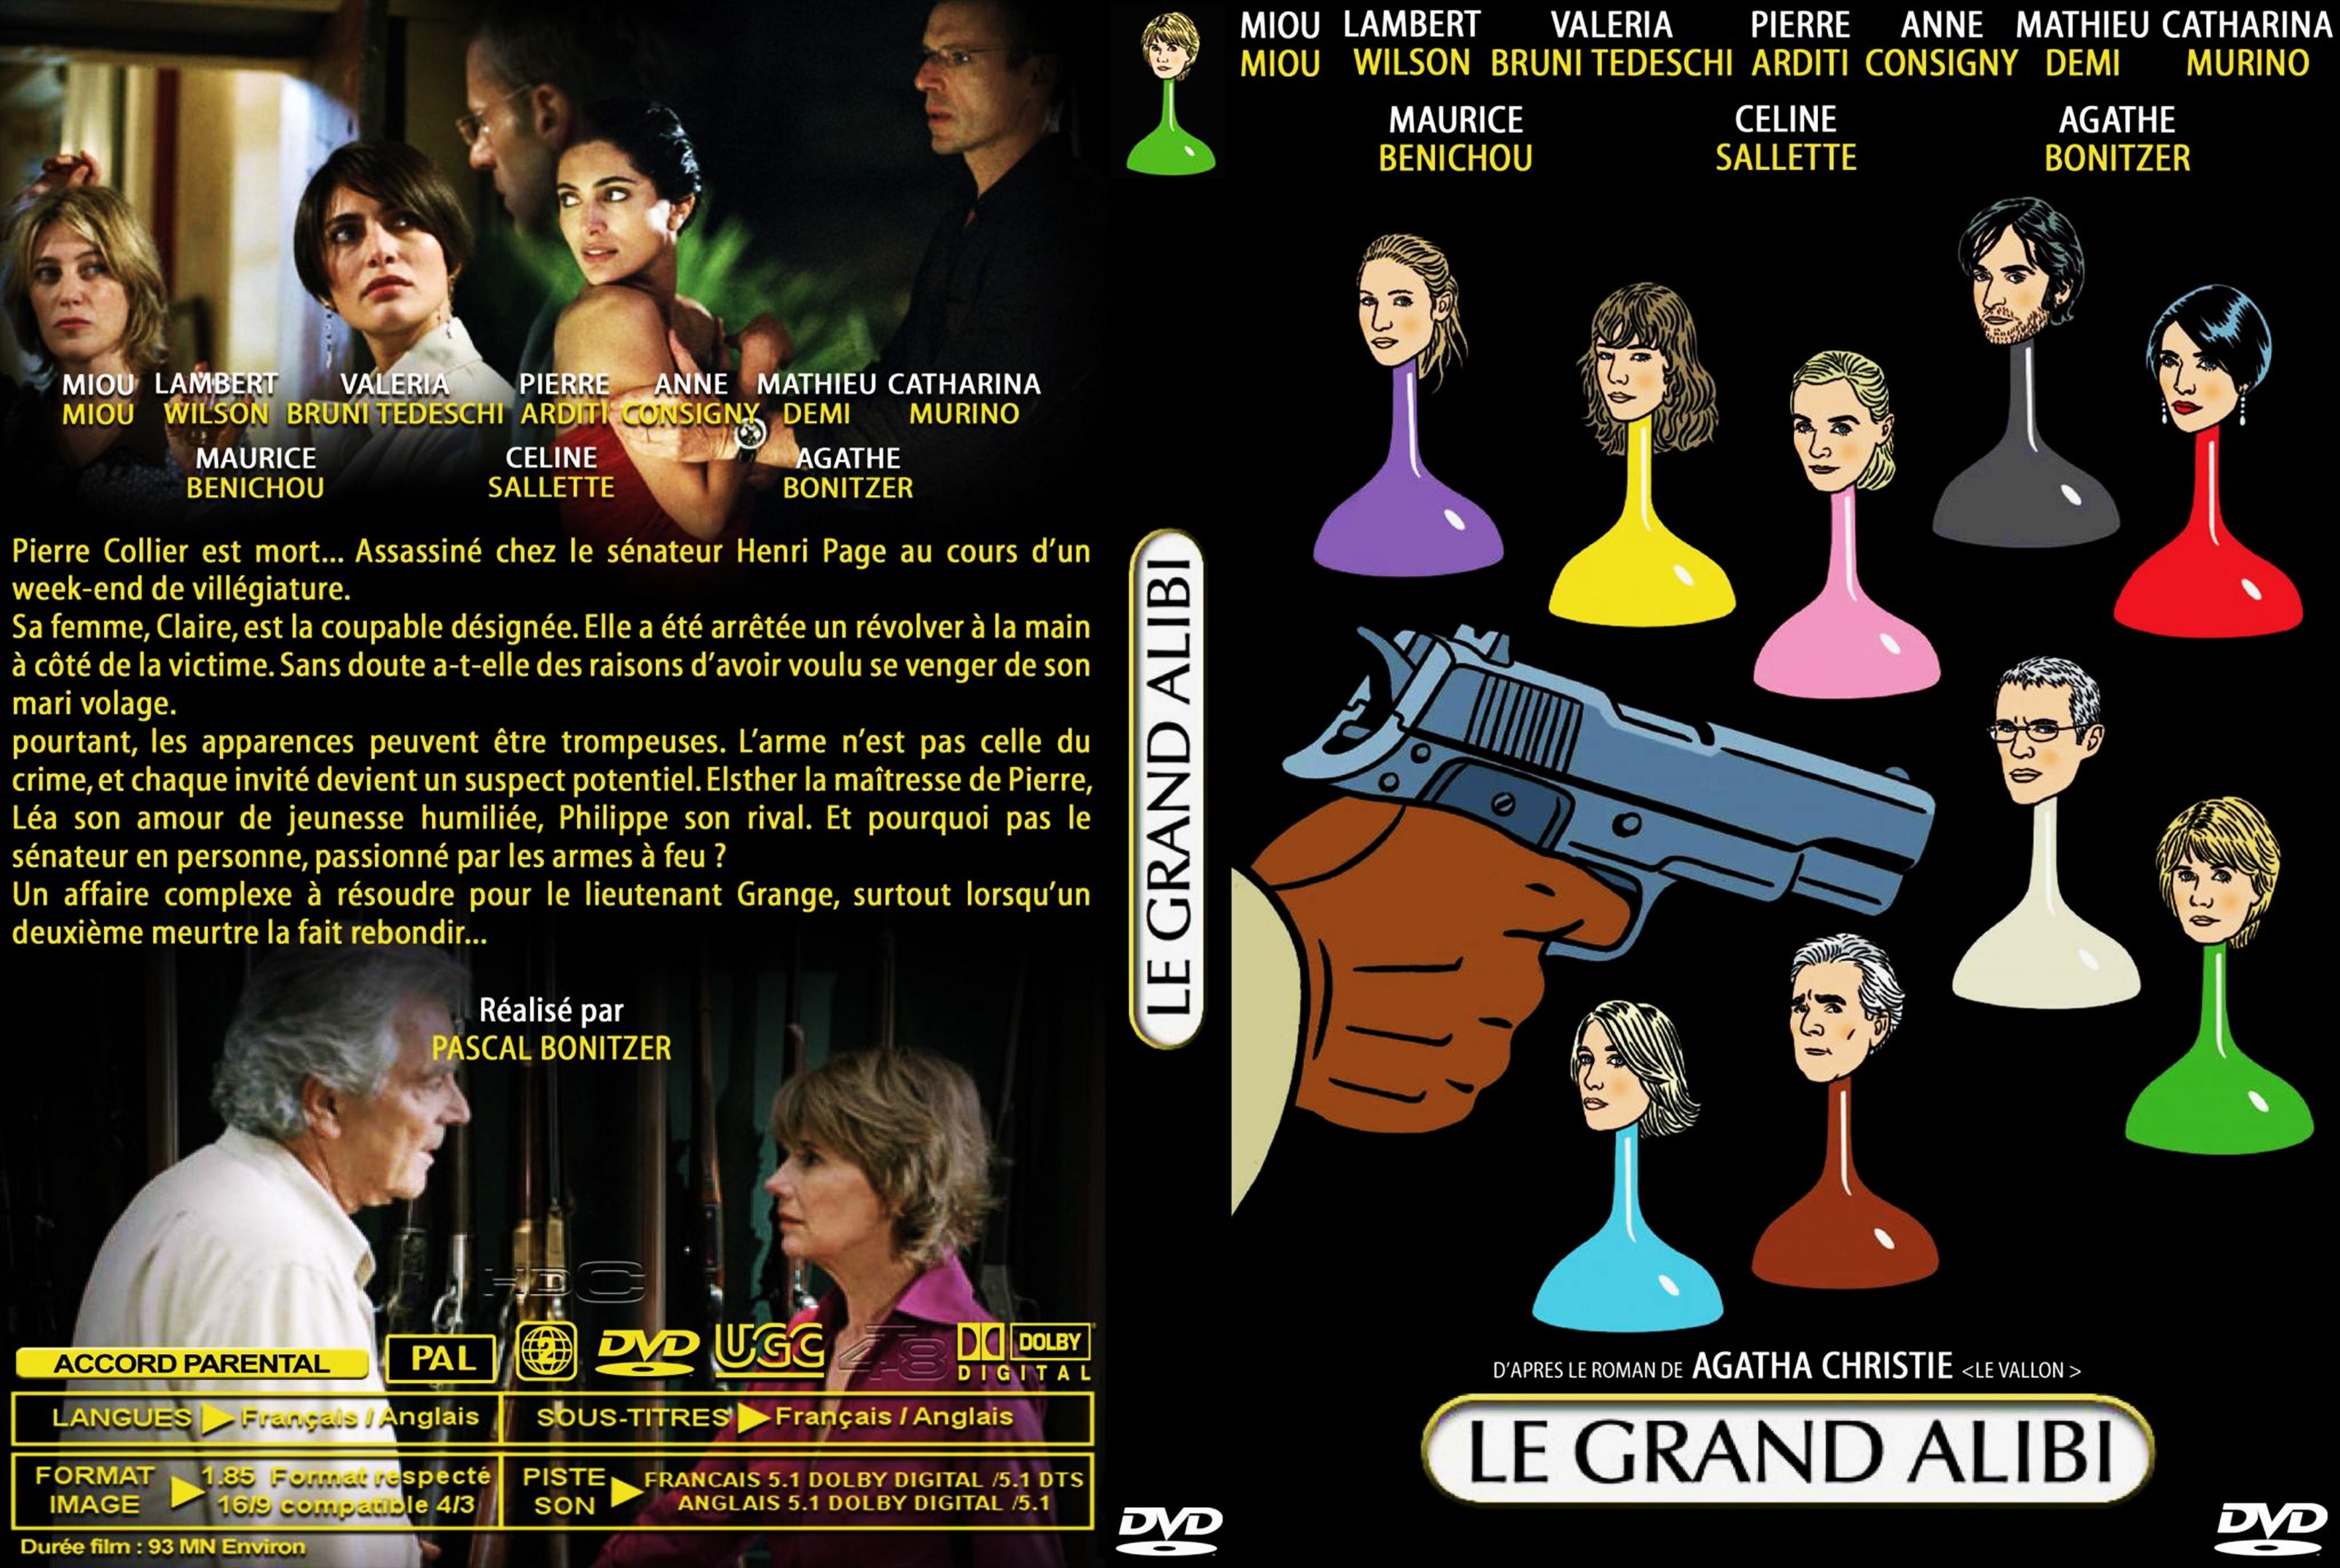 Jaquette DVD Le grand alibi (2008) custom